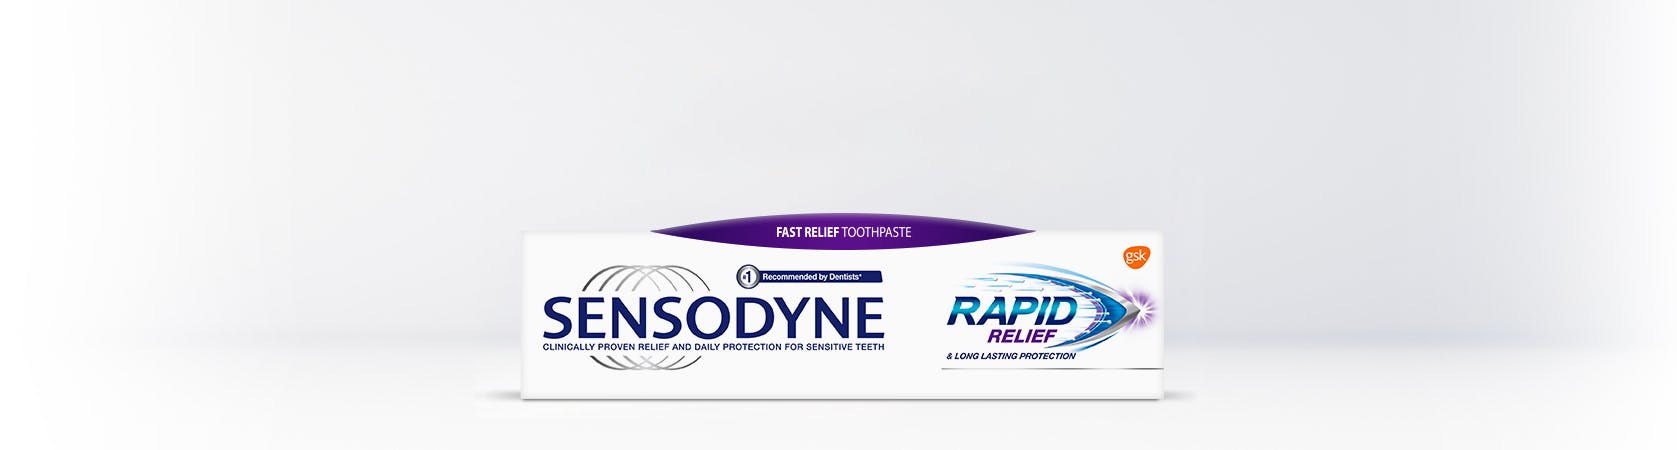 Sensodyne Rapid Relief campaign banner